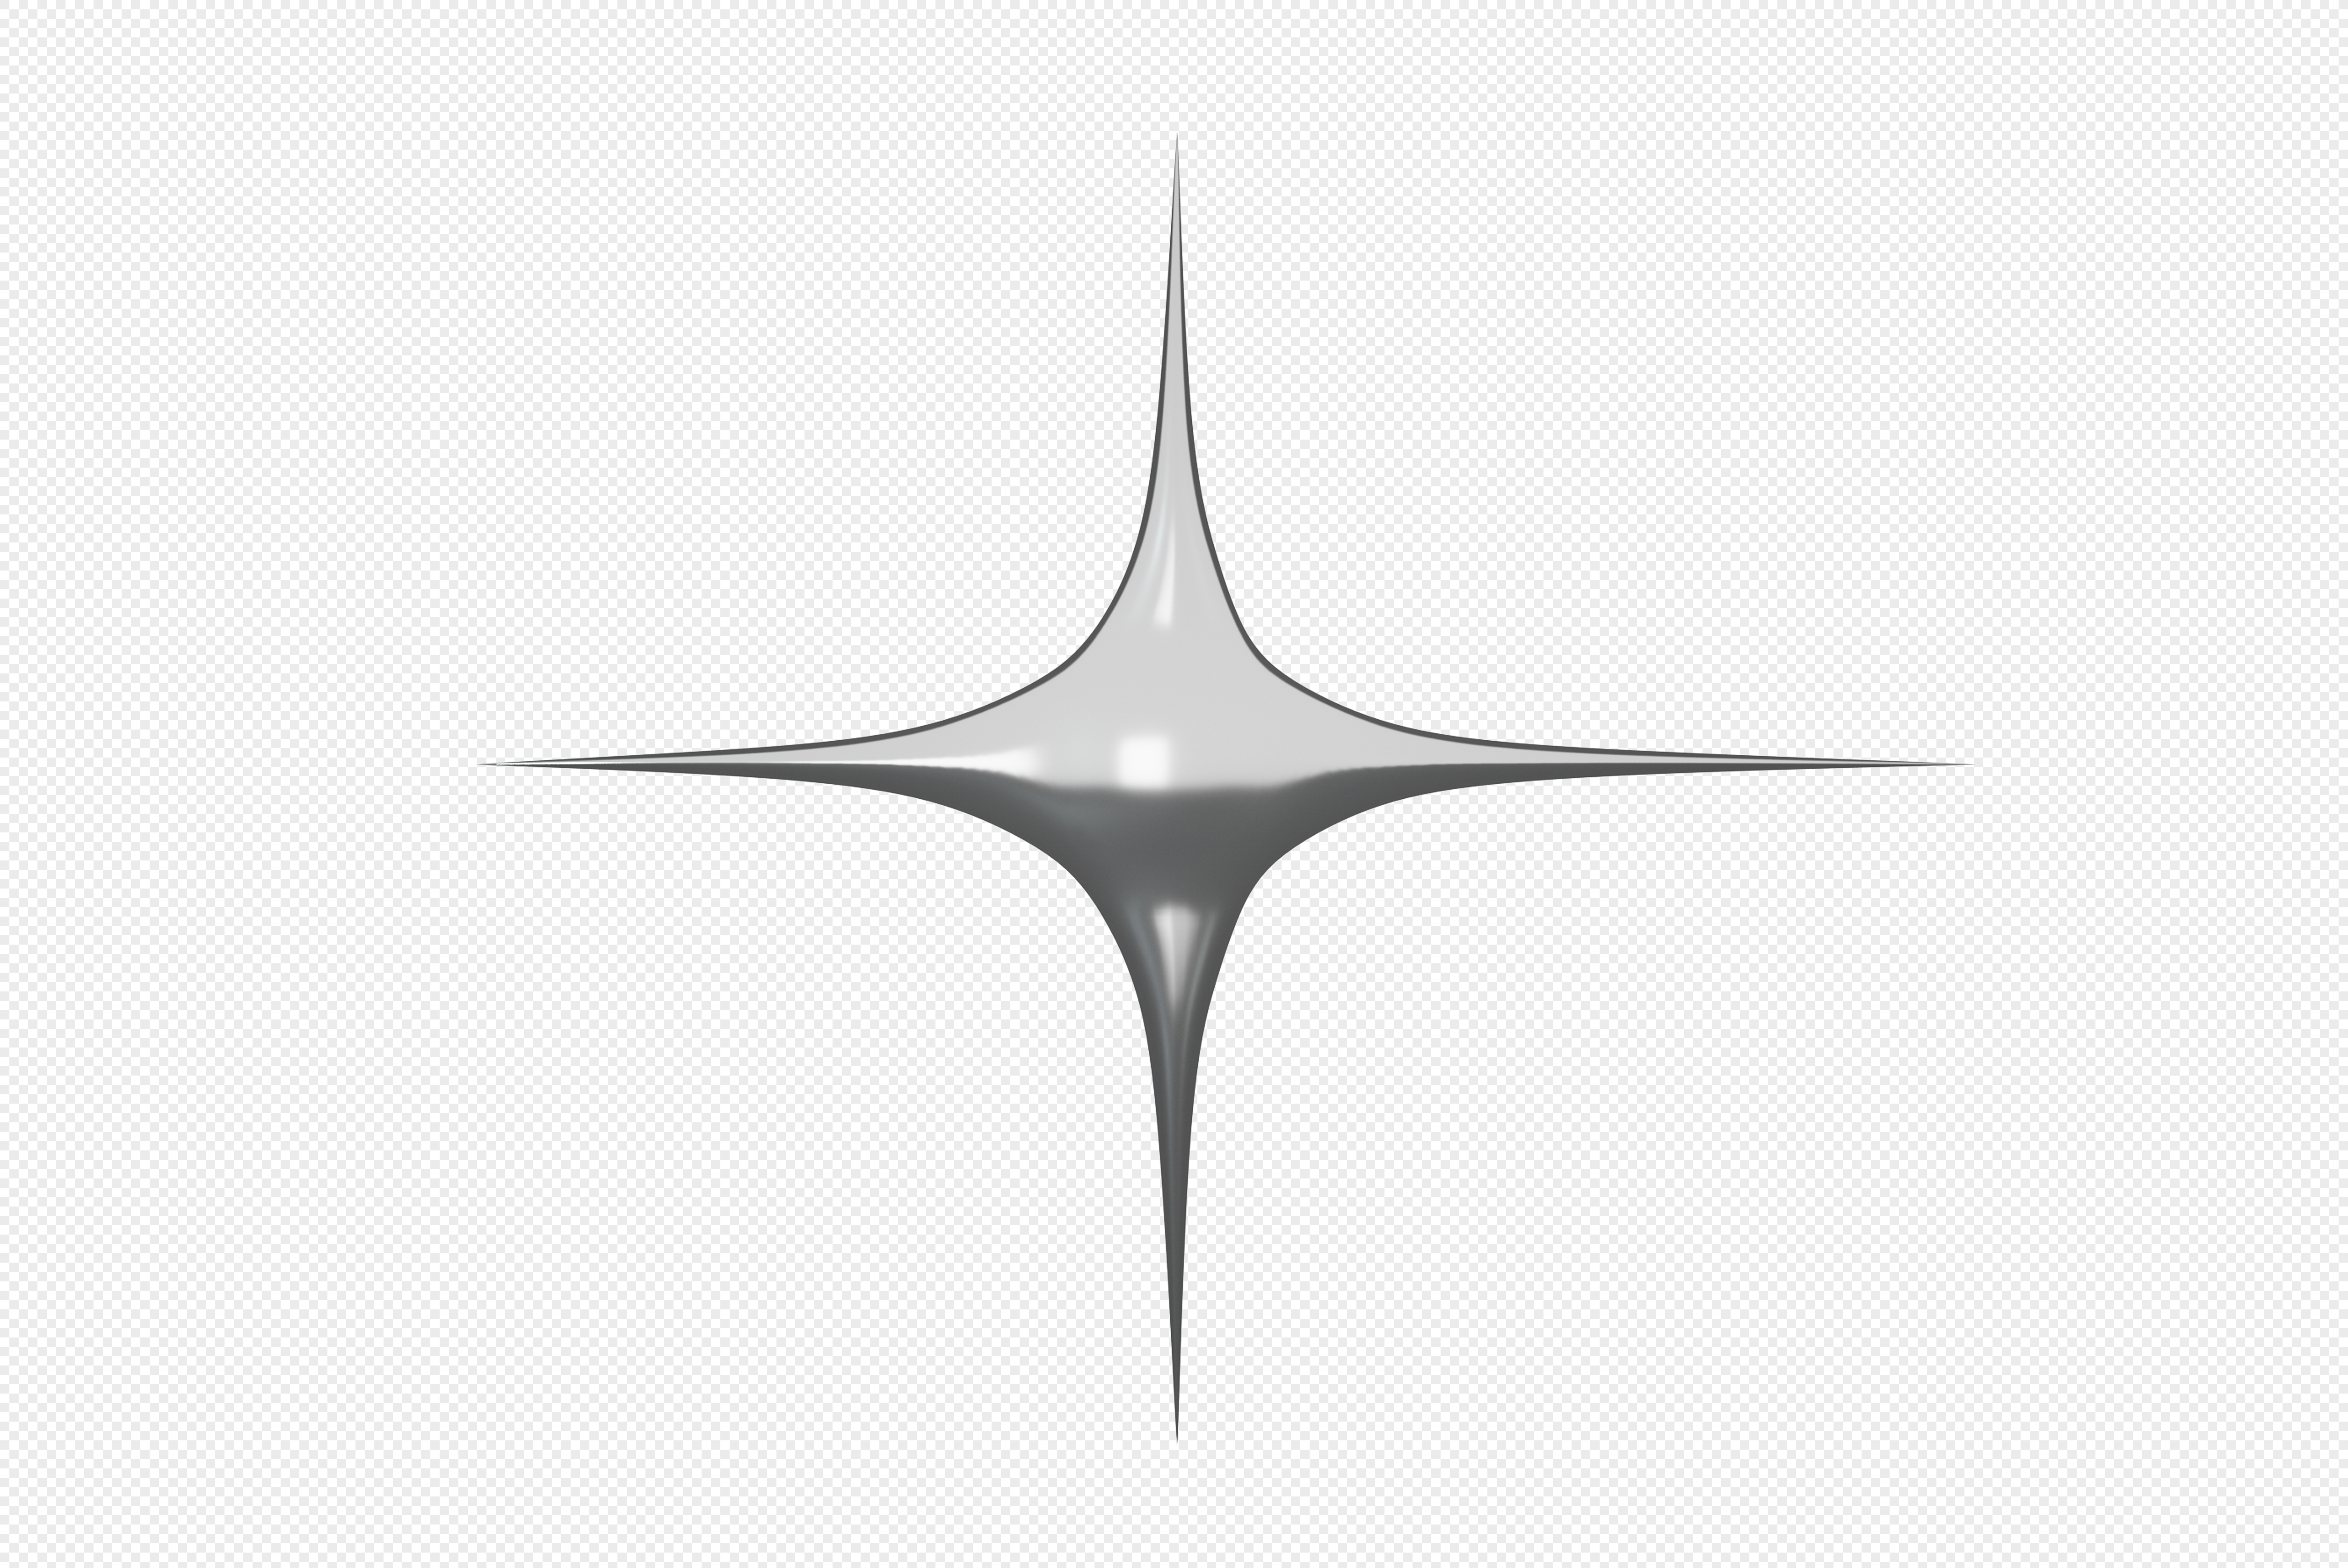 4 point star logo